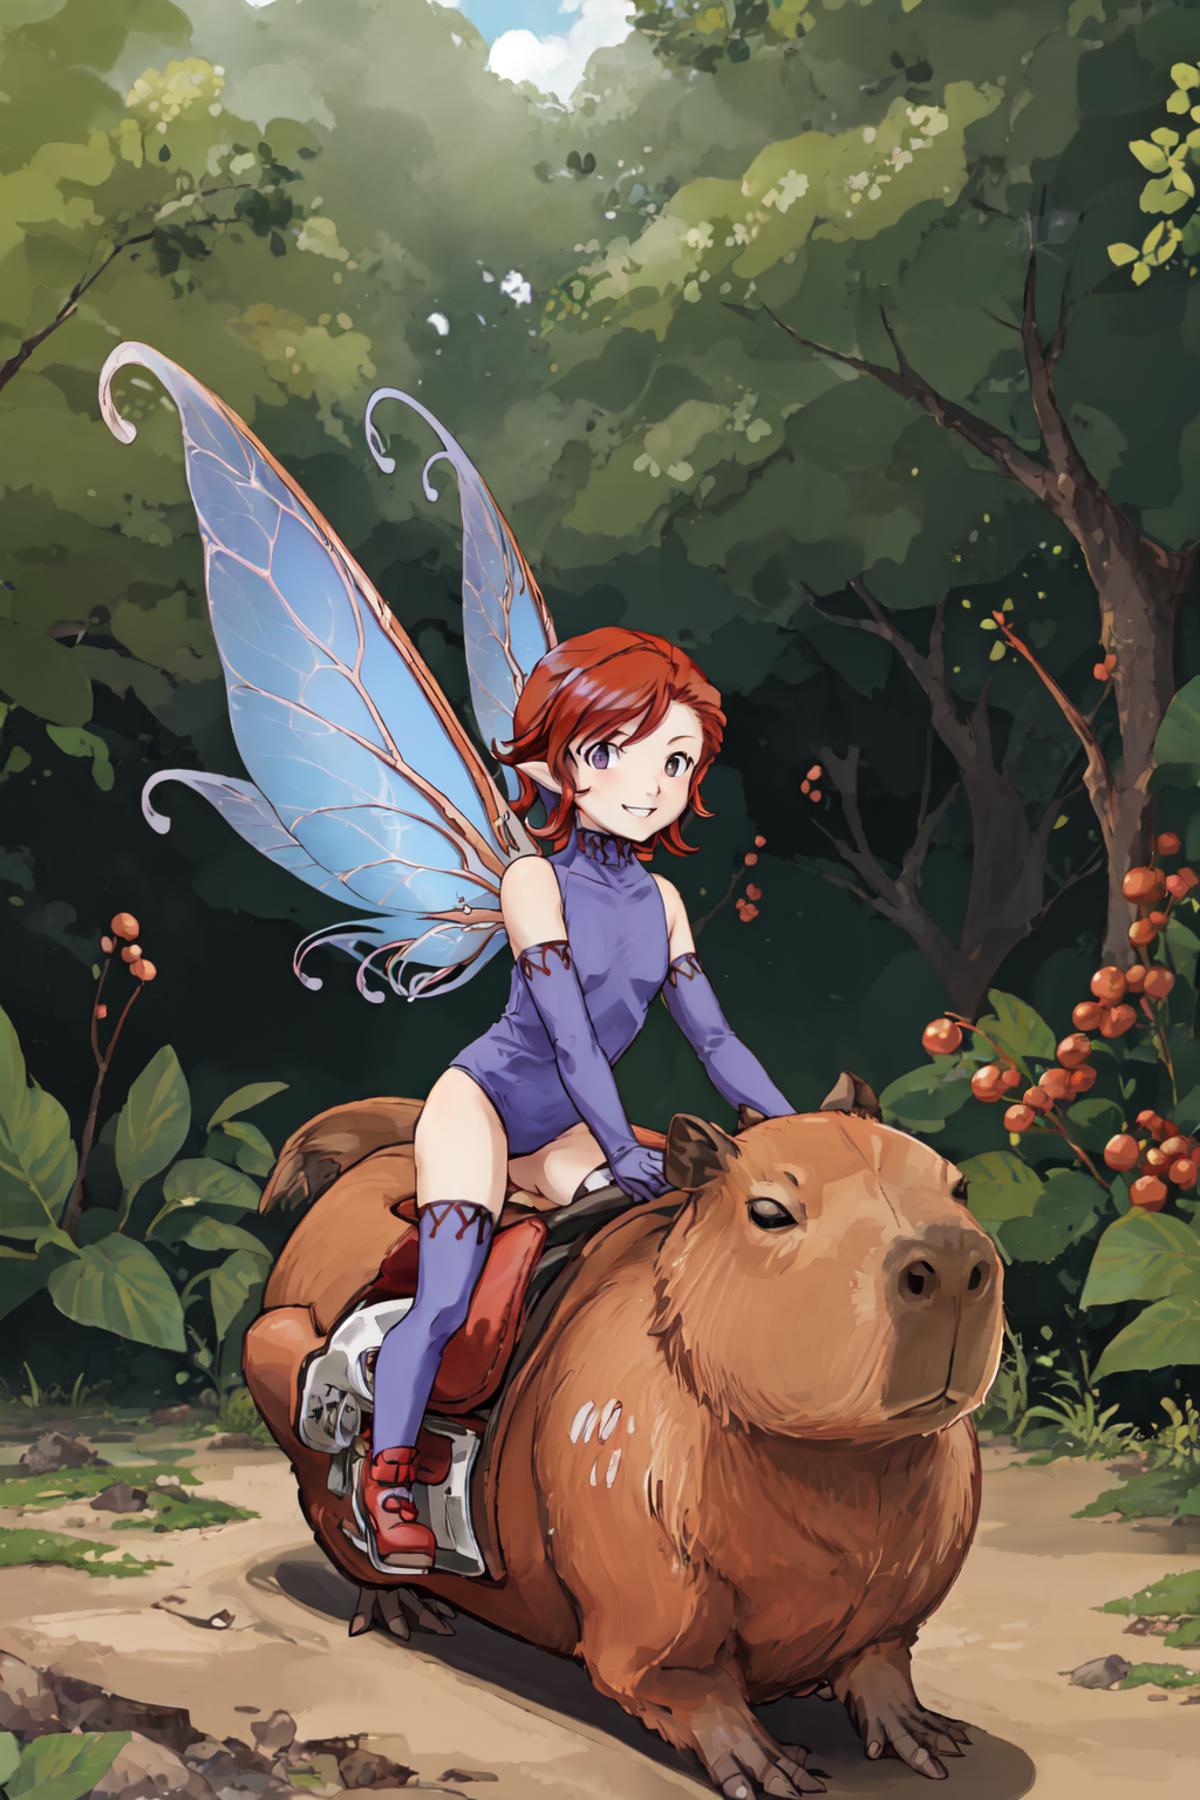 Fairy Pixie - Shin Megami Tensei image by ChaosOrchestrator